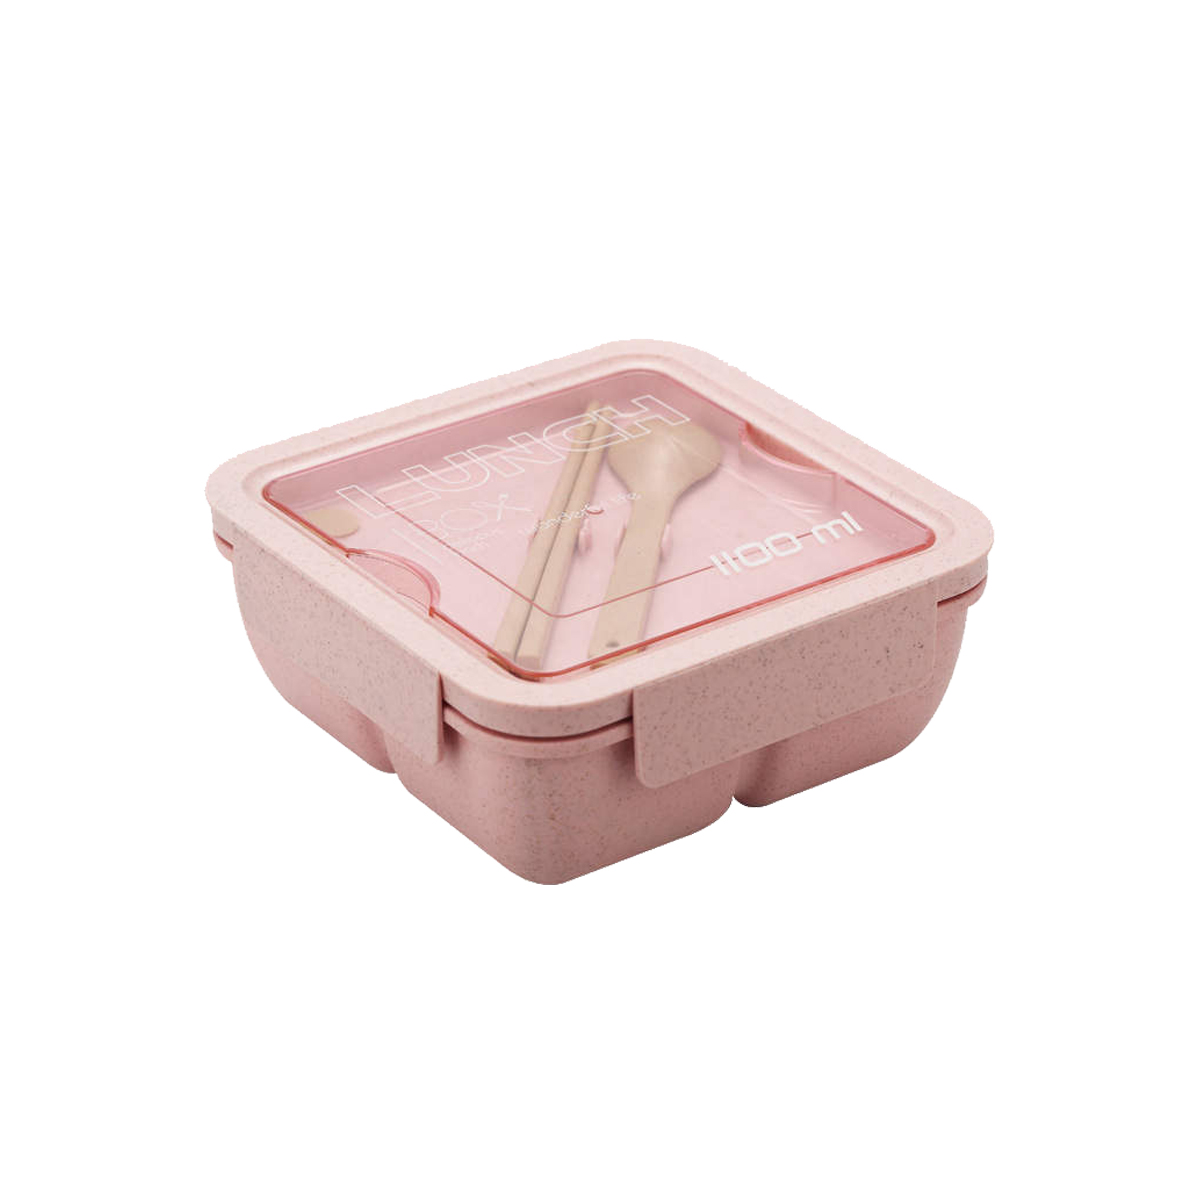 50468-01-bento-lunch-box